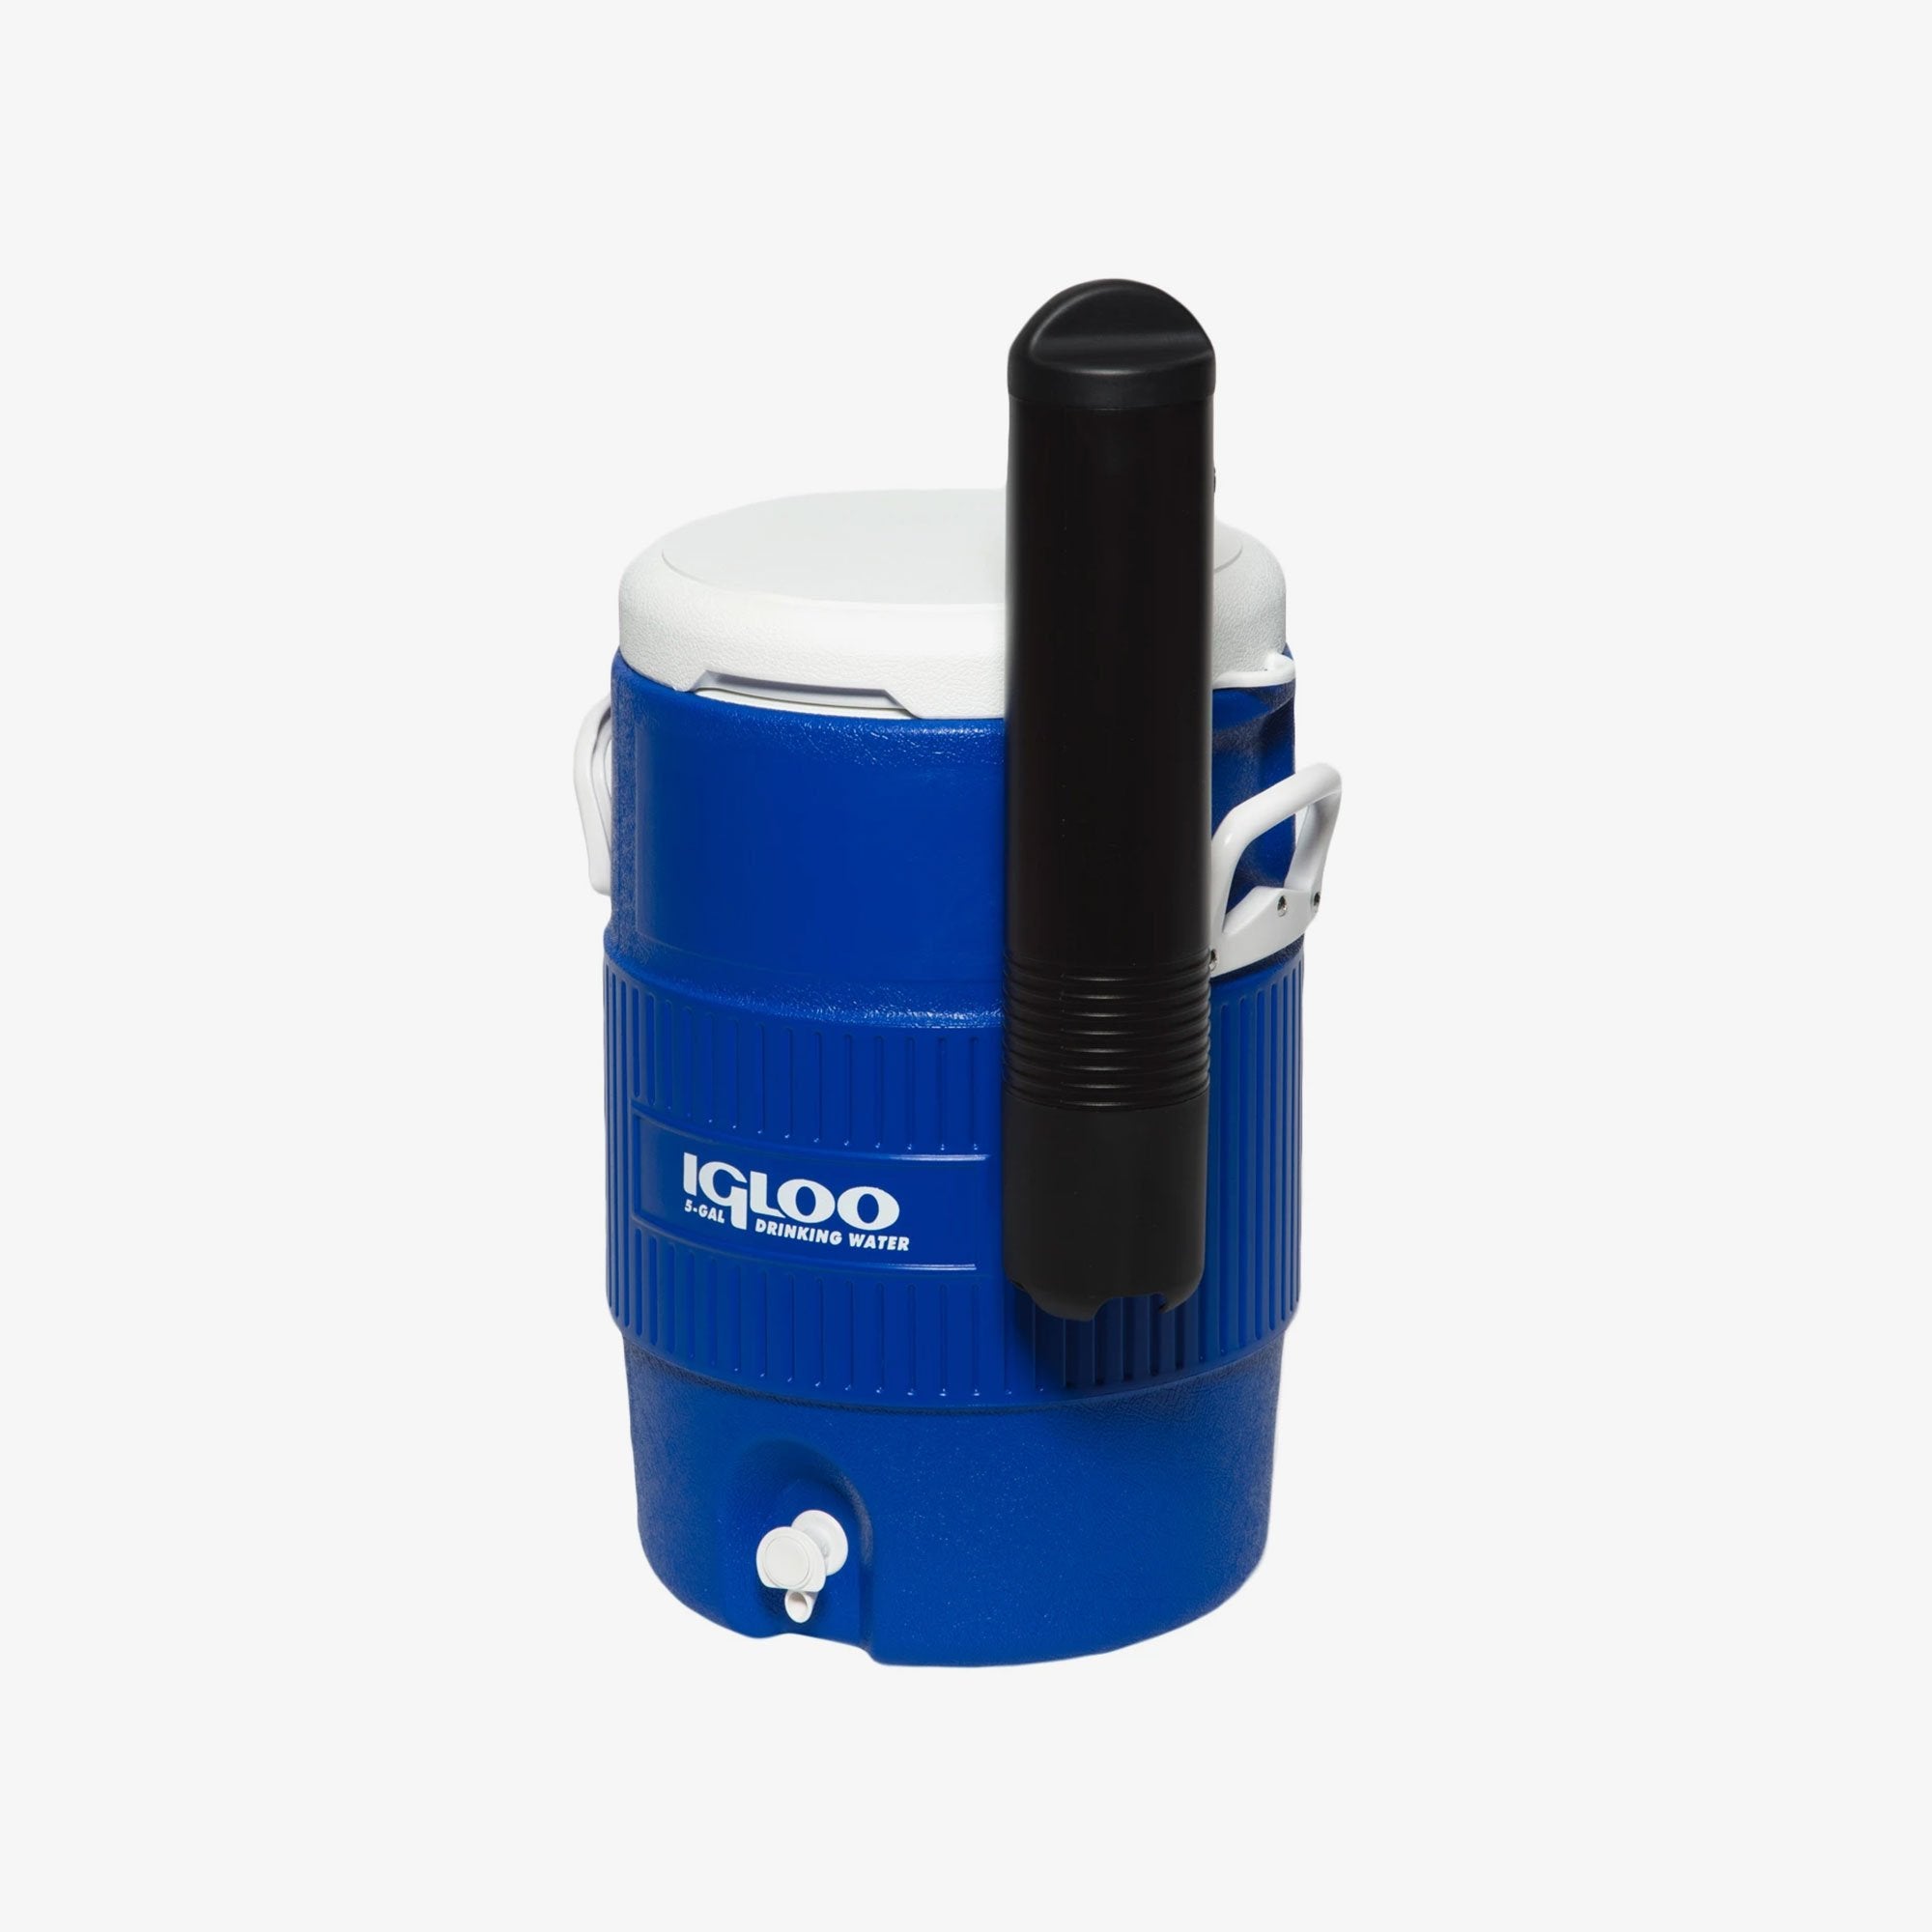 igloo 5 gallon water jug